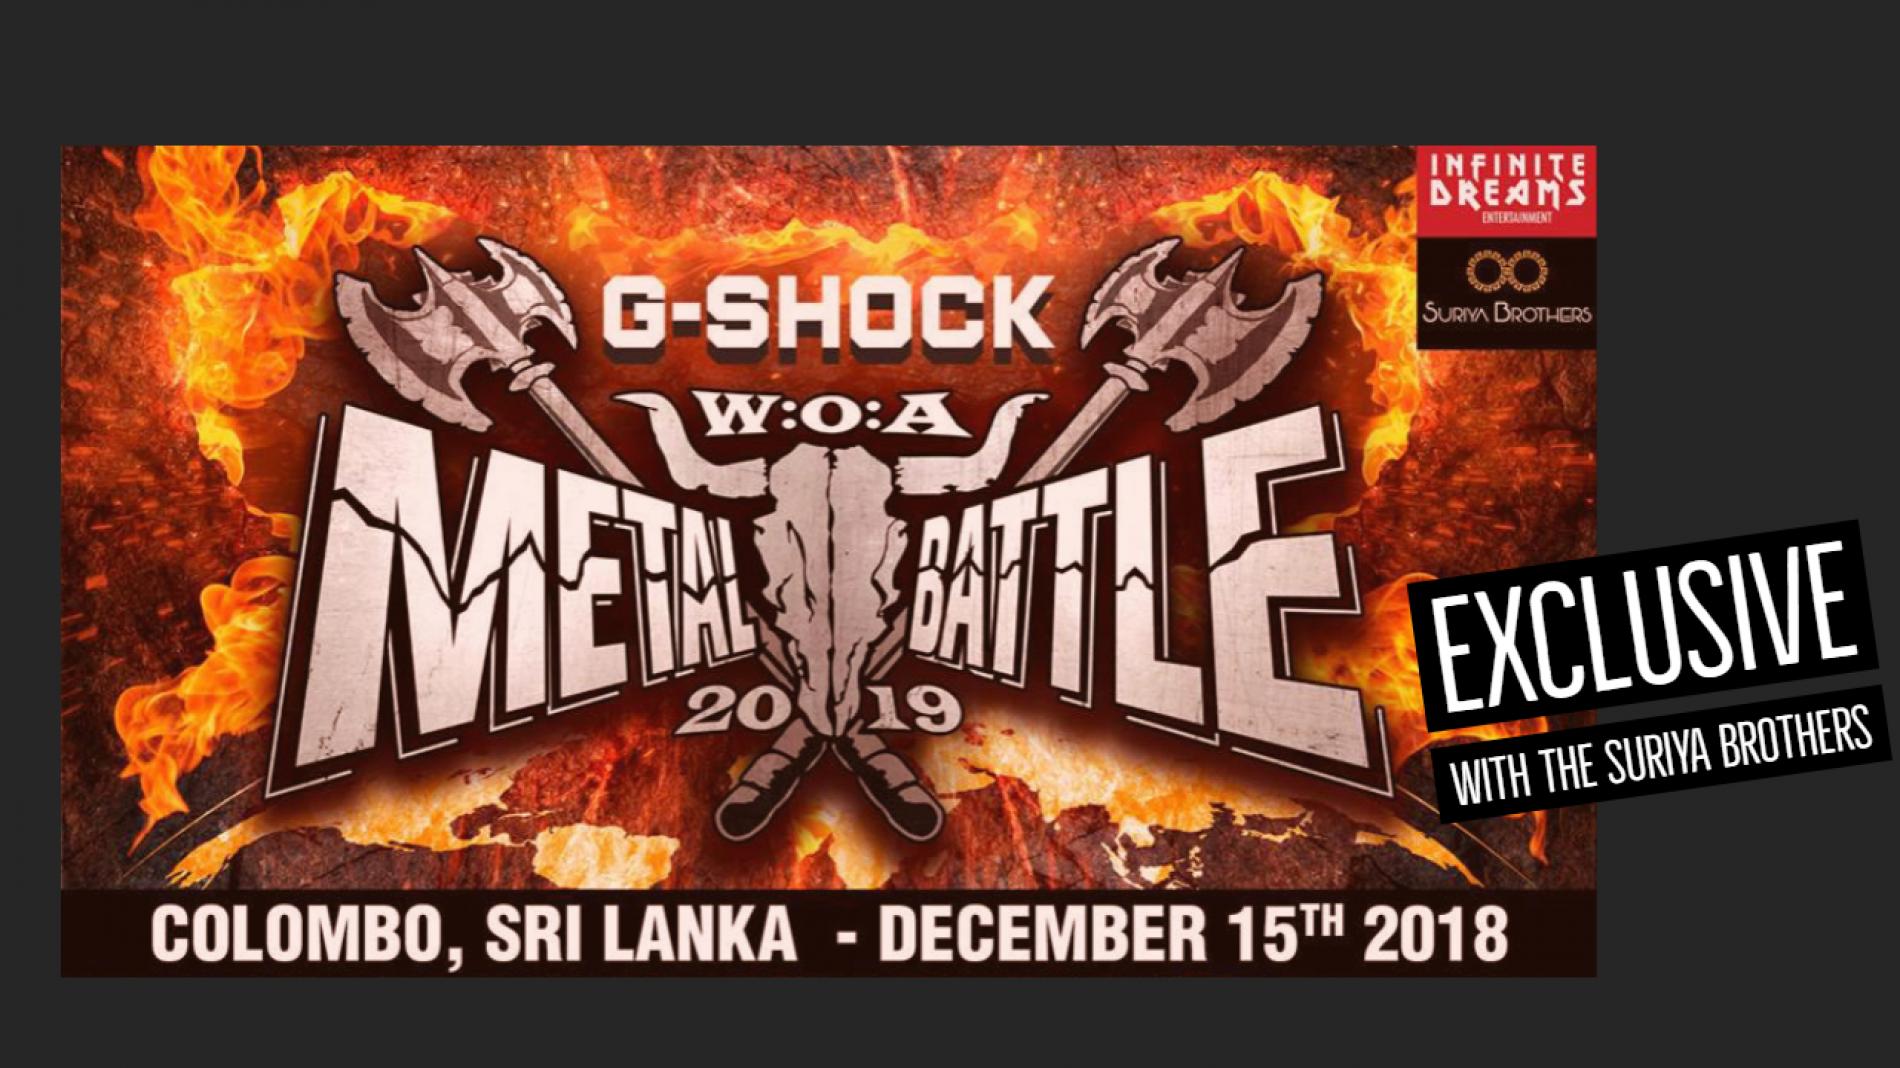 The Suriya Brothers On The Wacken Metal Battle CMB